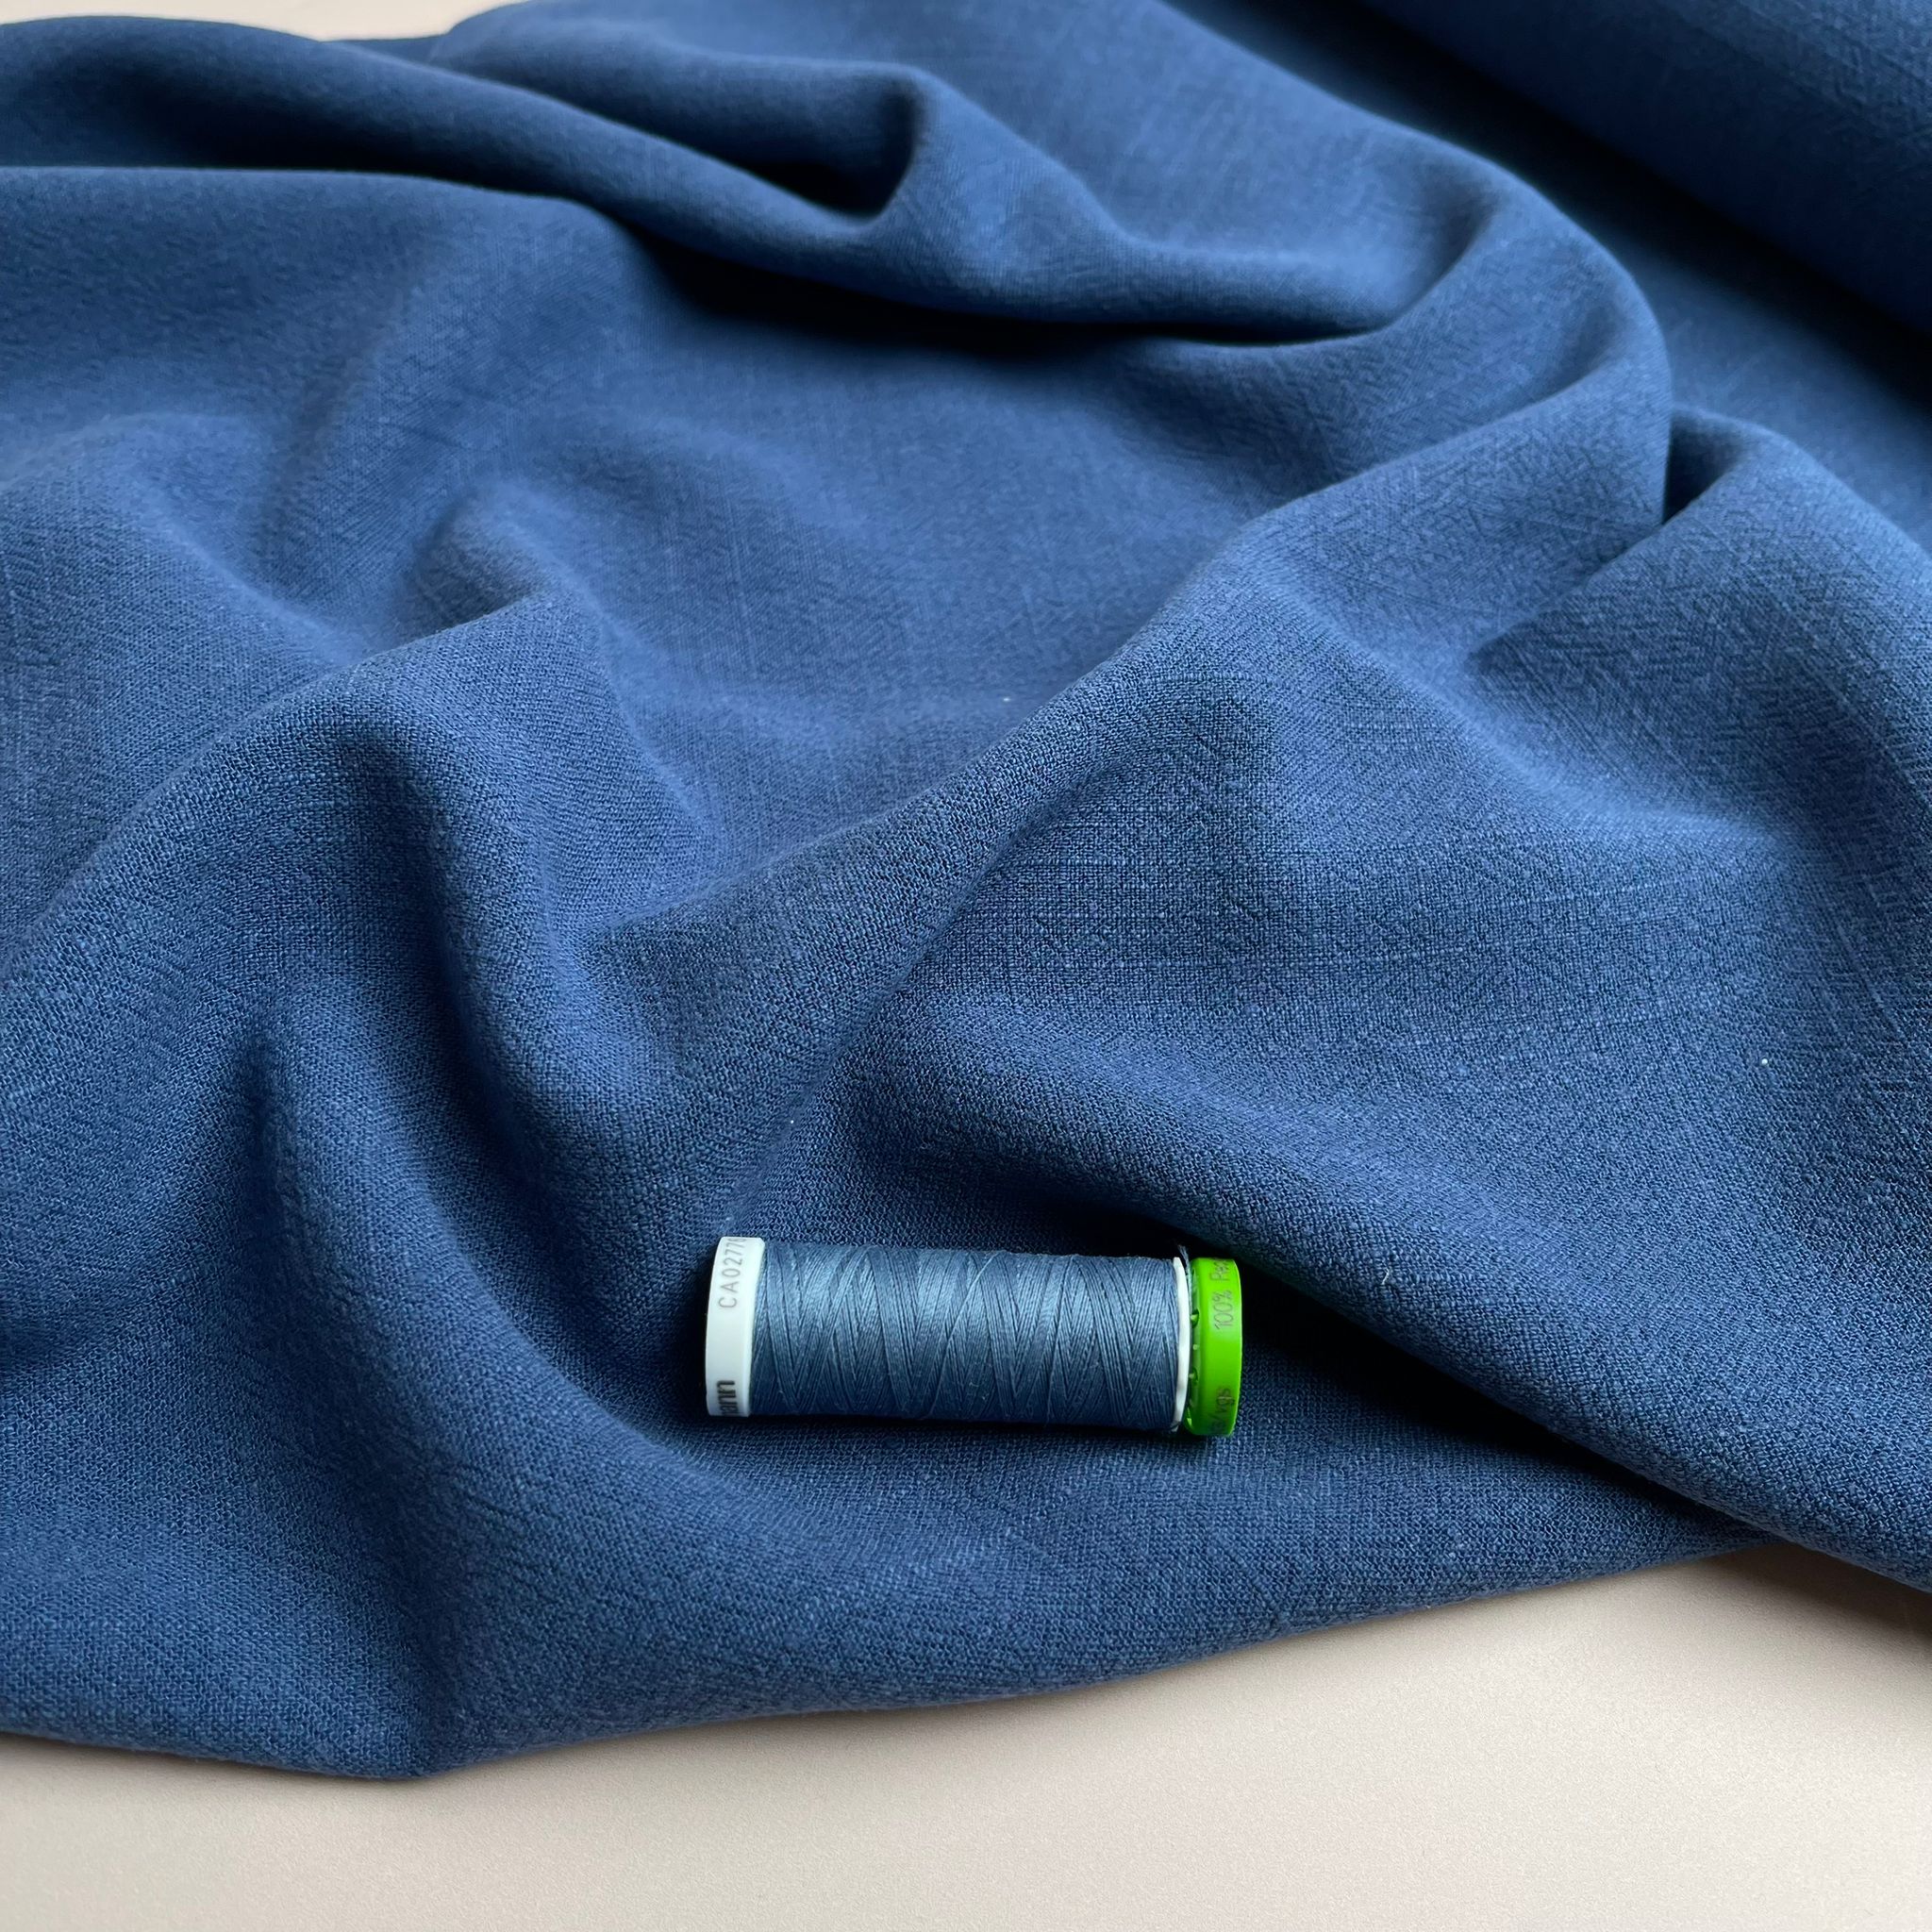 REMNANT 0.82 Metre -  Flow Denim Blue Viscose Linen Blend Dress Fabric